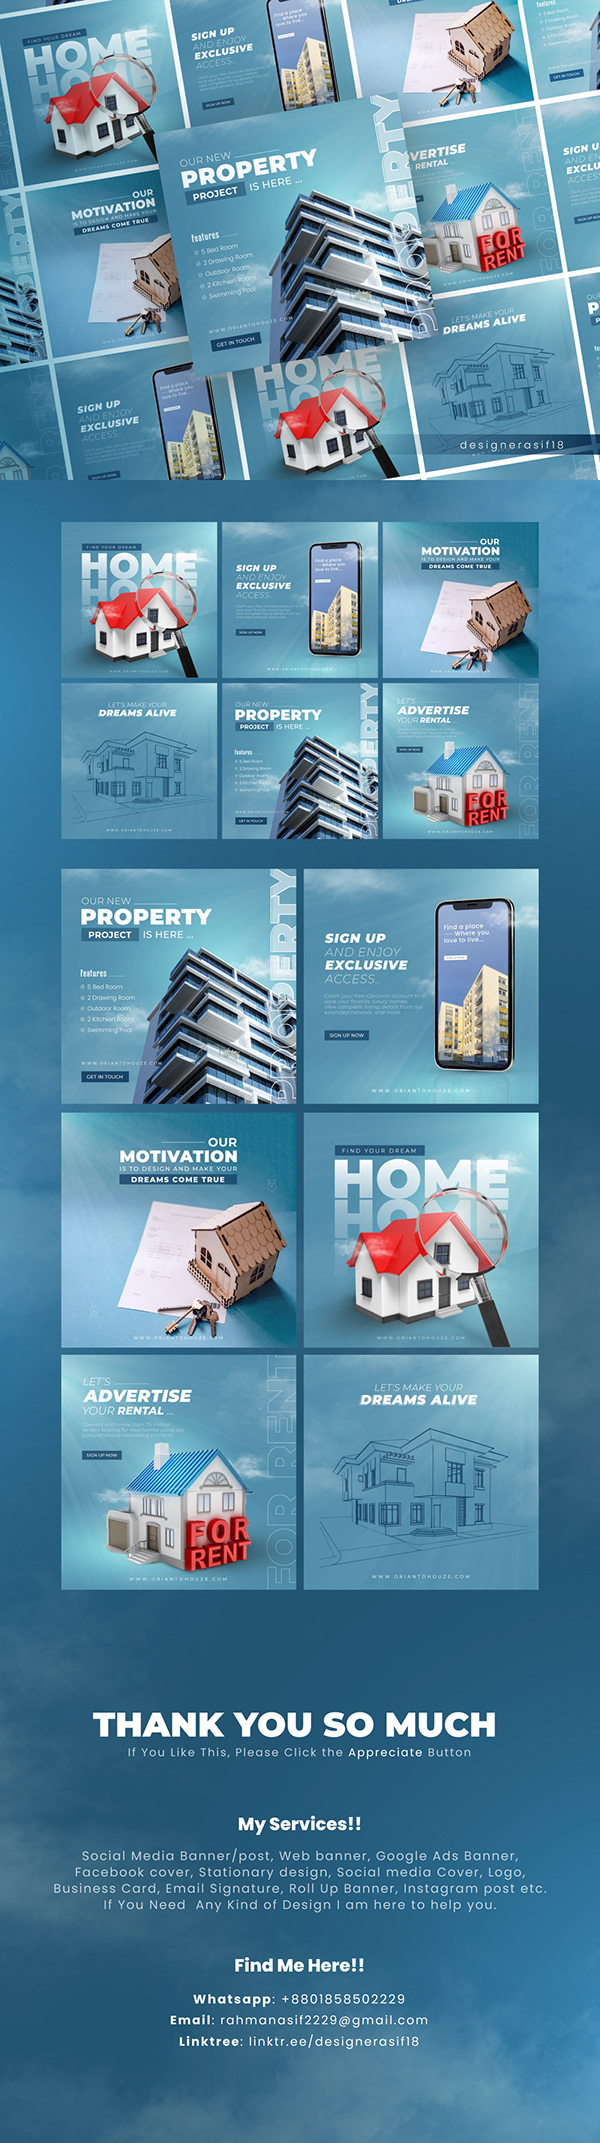 Social Media Design | Real-estate Agency Banner Design